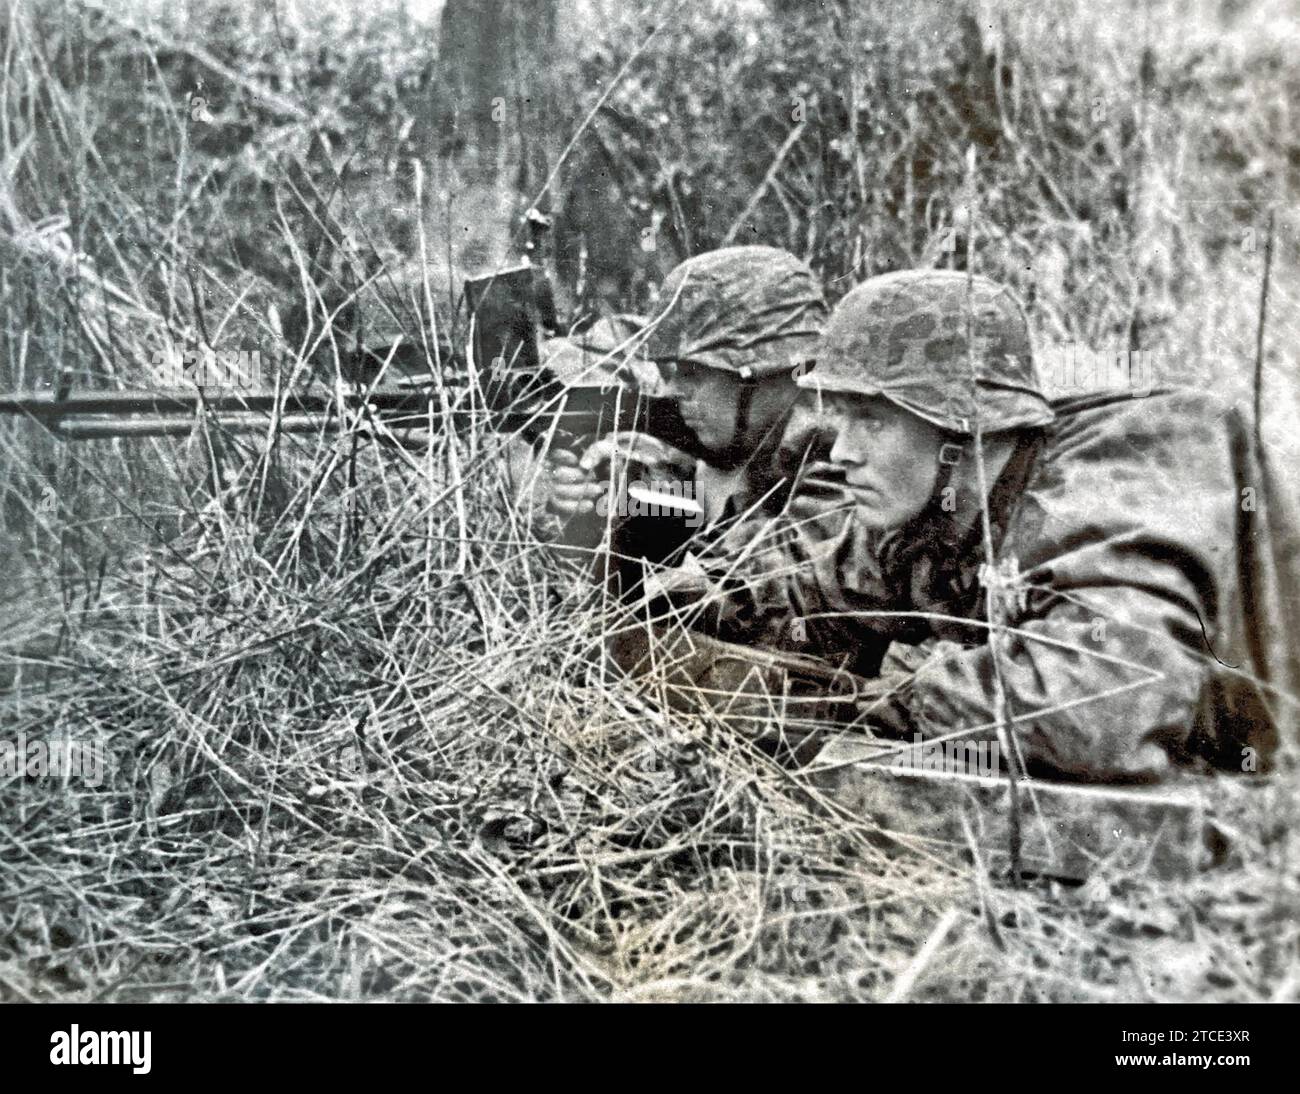 GERMAN WAFFEN-SS soldiers firing an MG26 light machine gun wearing camouflage helmets and cloaks. Stock Photo